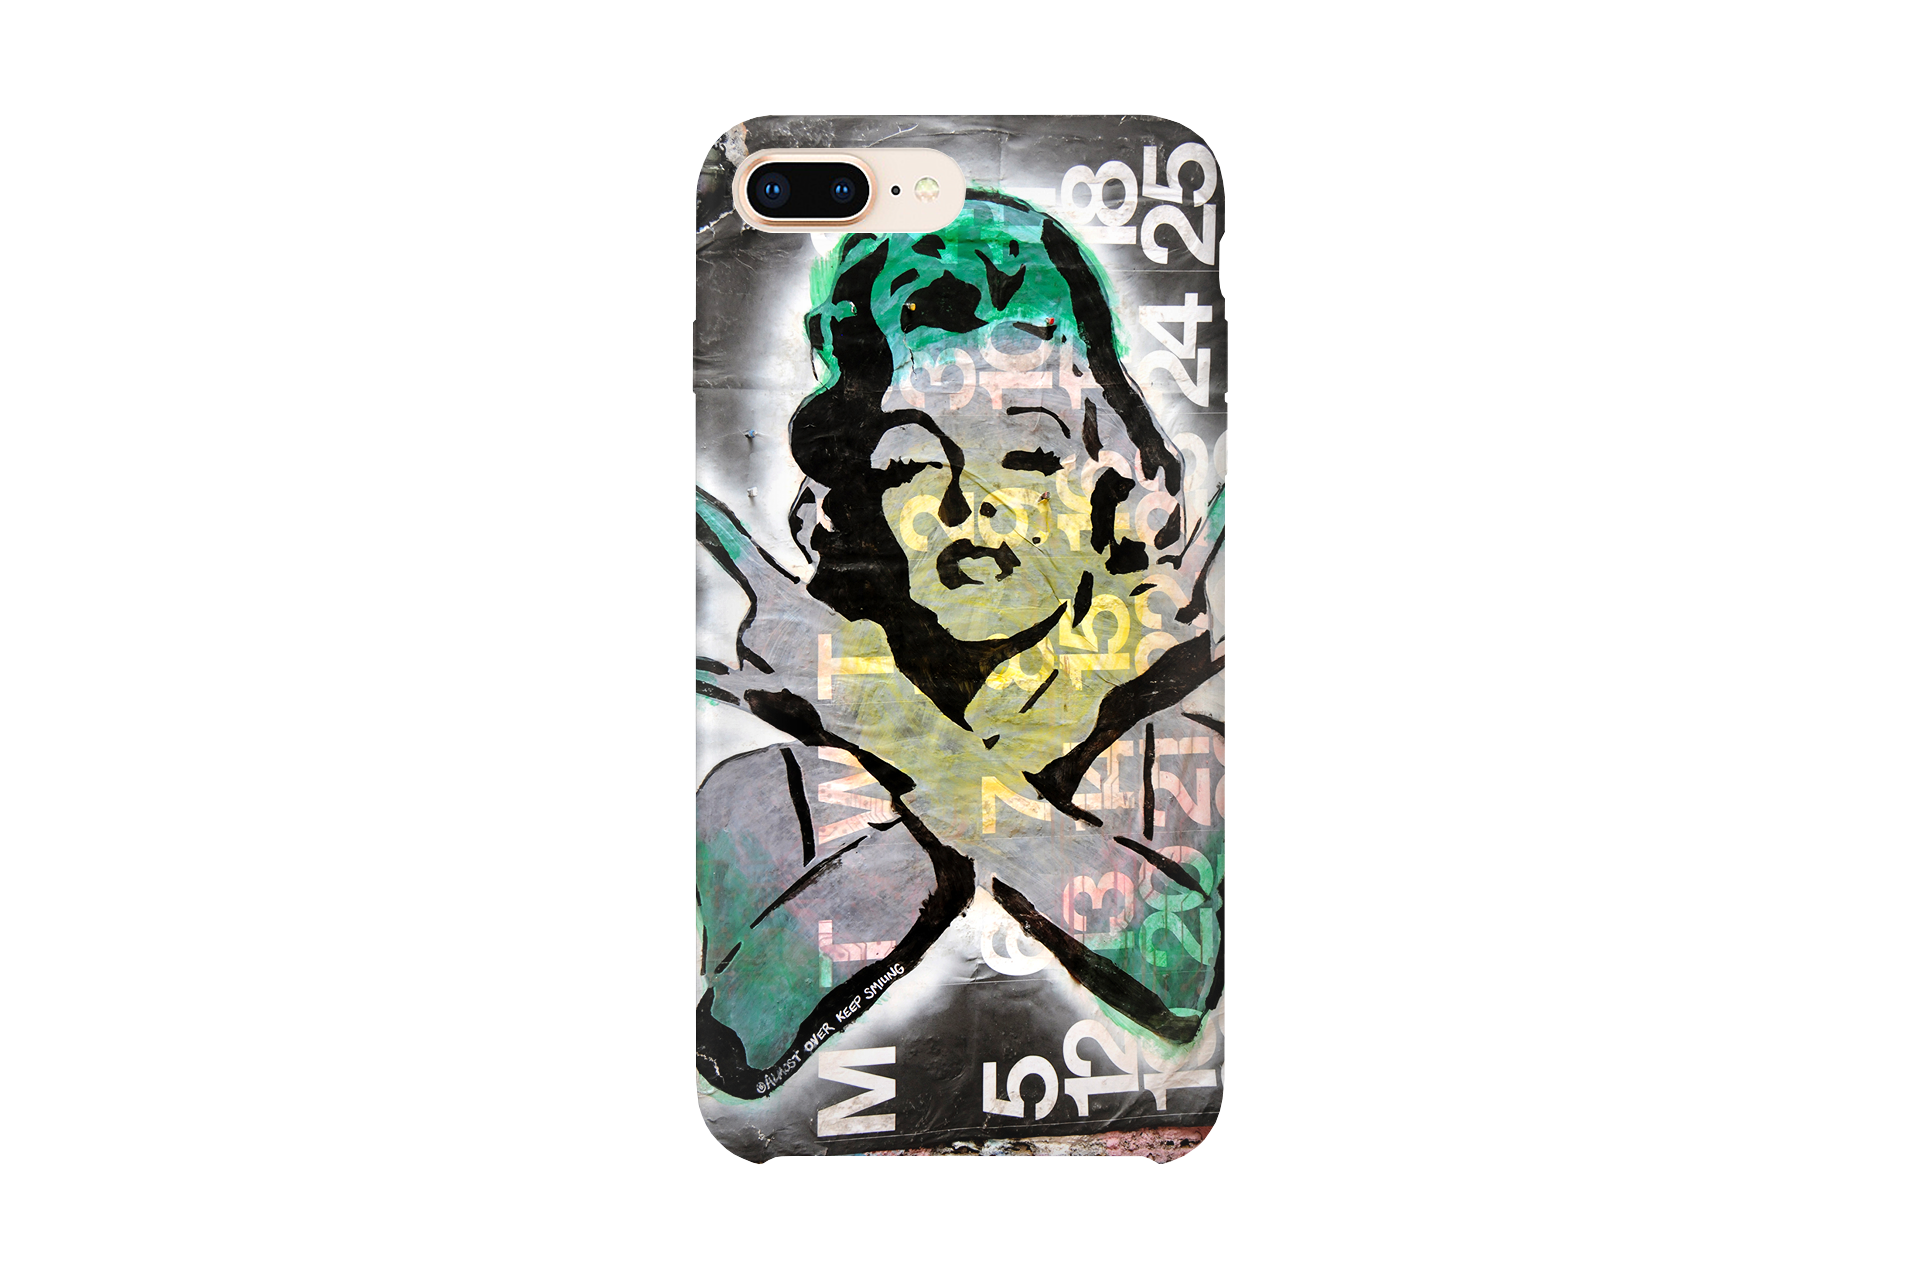 Marilyn Monroe iPhone case by Mike Lindwasser